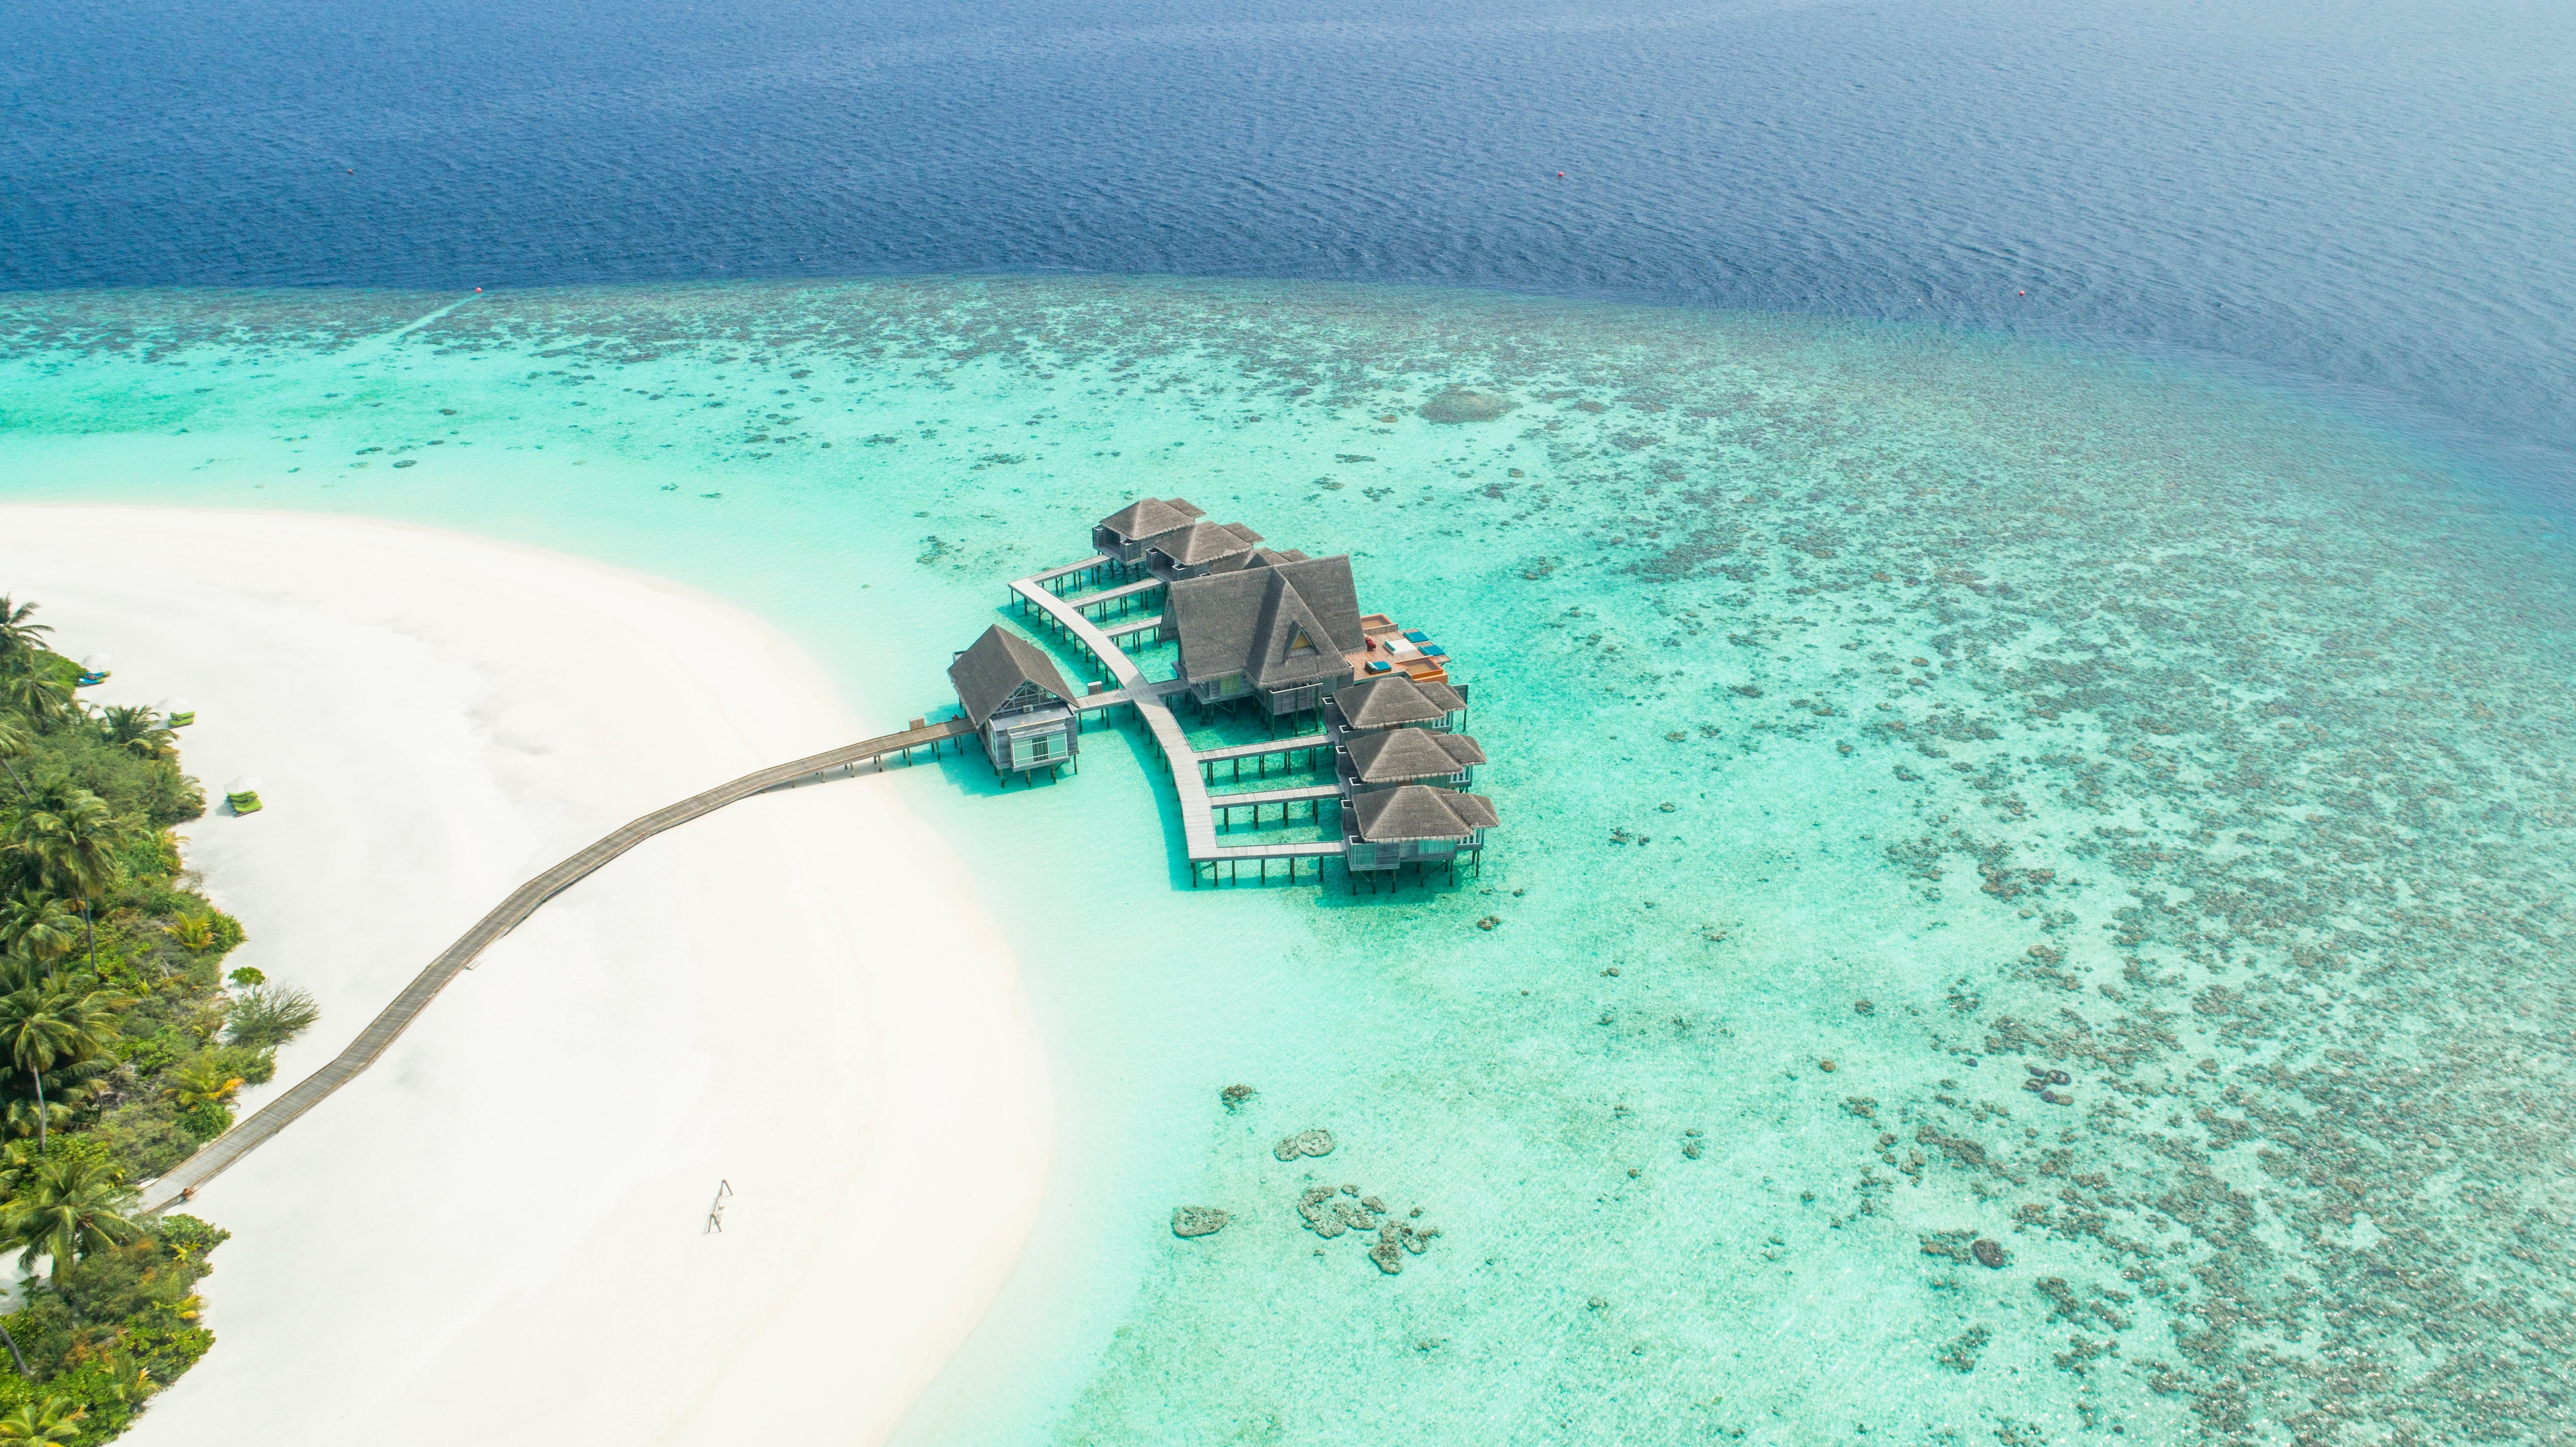 Tropical Maldives